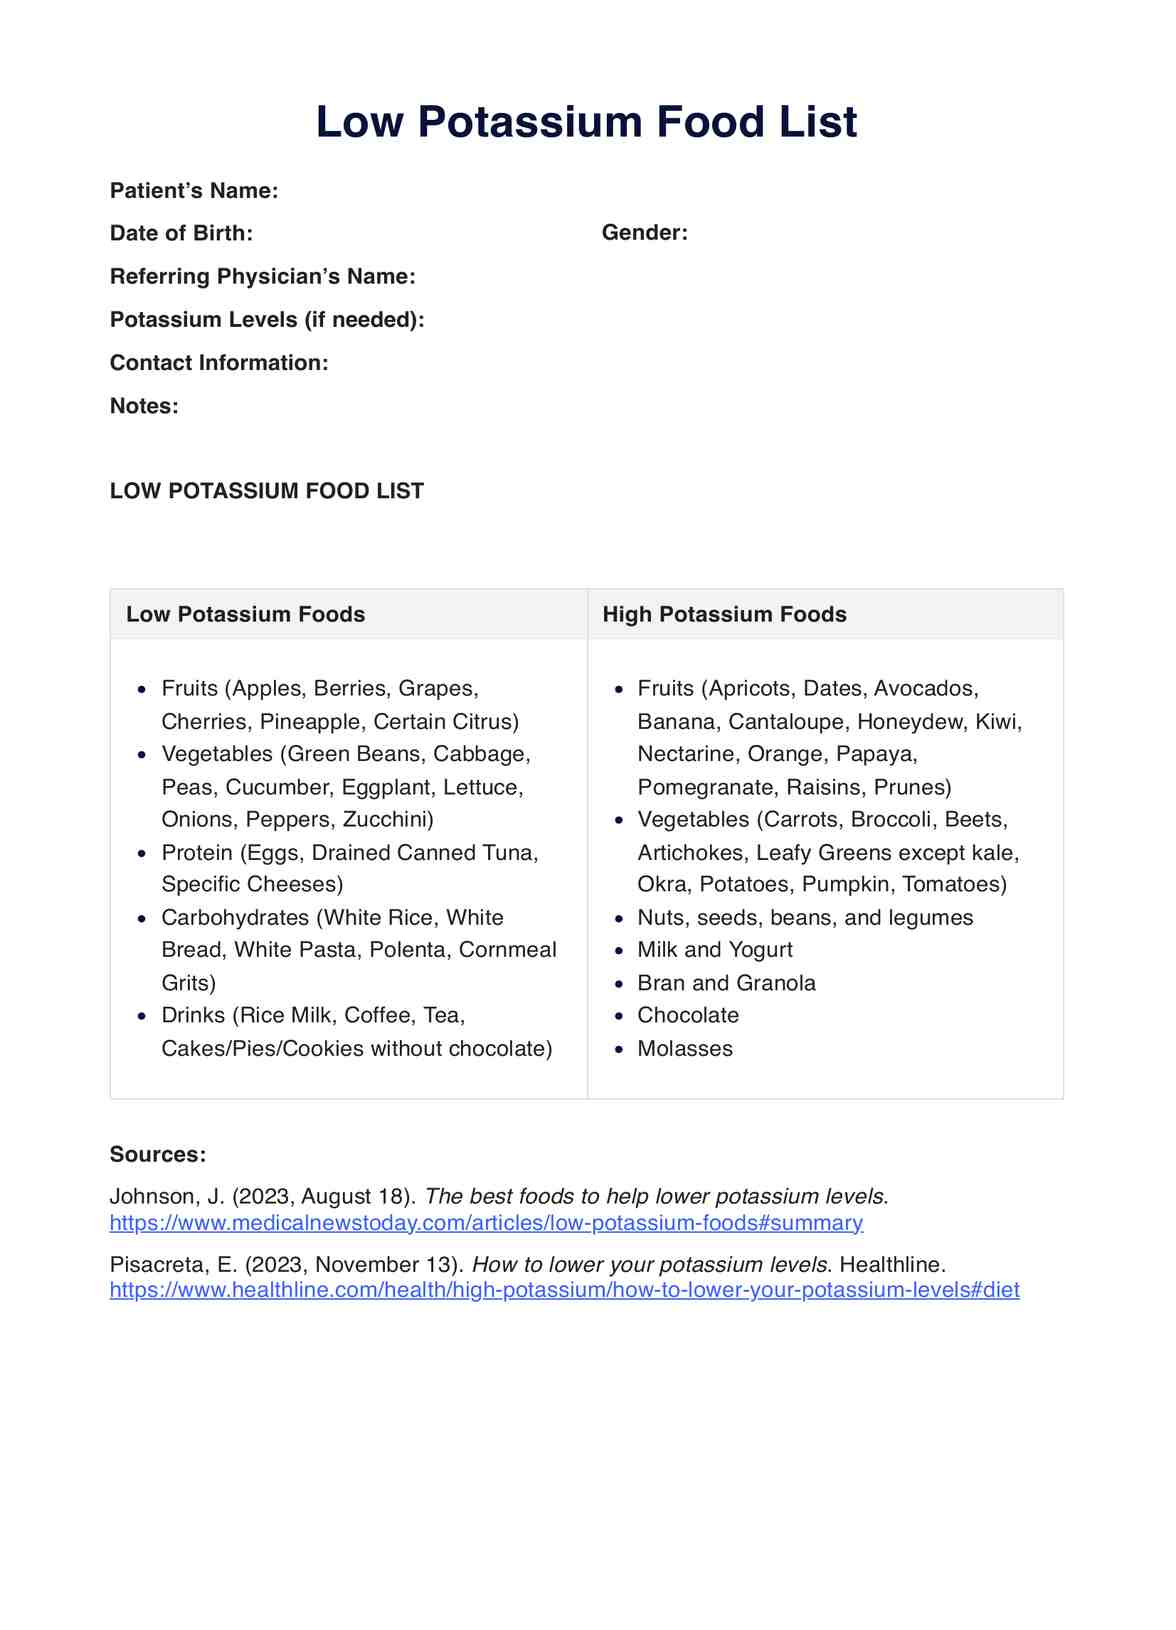 Low potassium foods list PDF Example